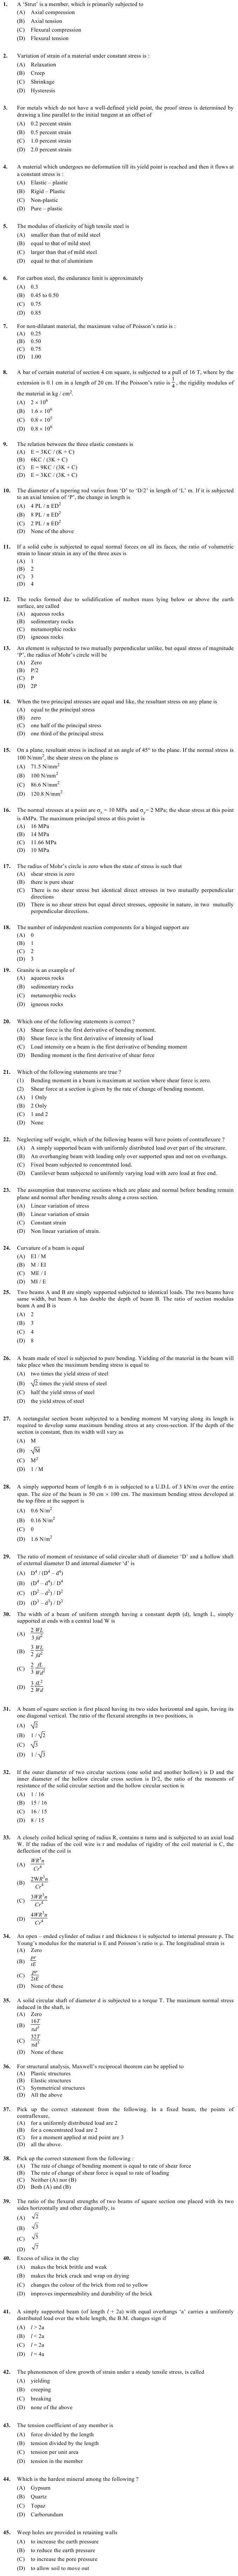 OJEE 2013 Question Paper for PGAT Civil